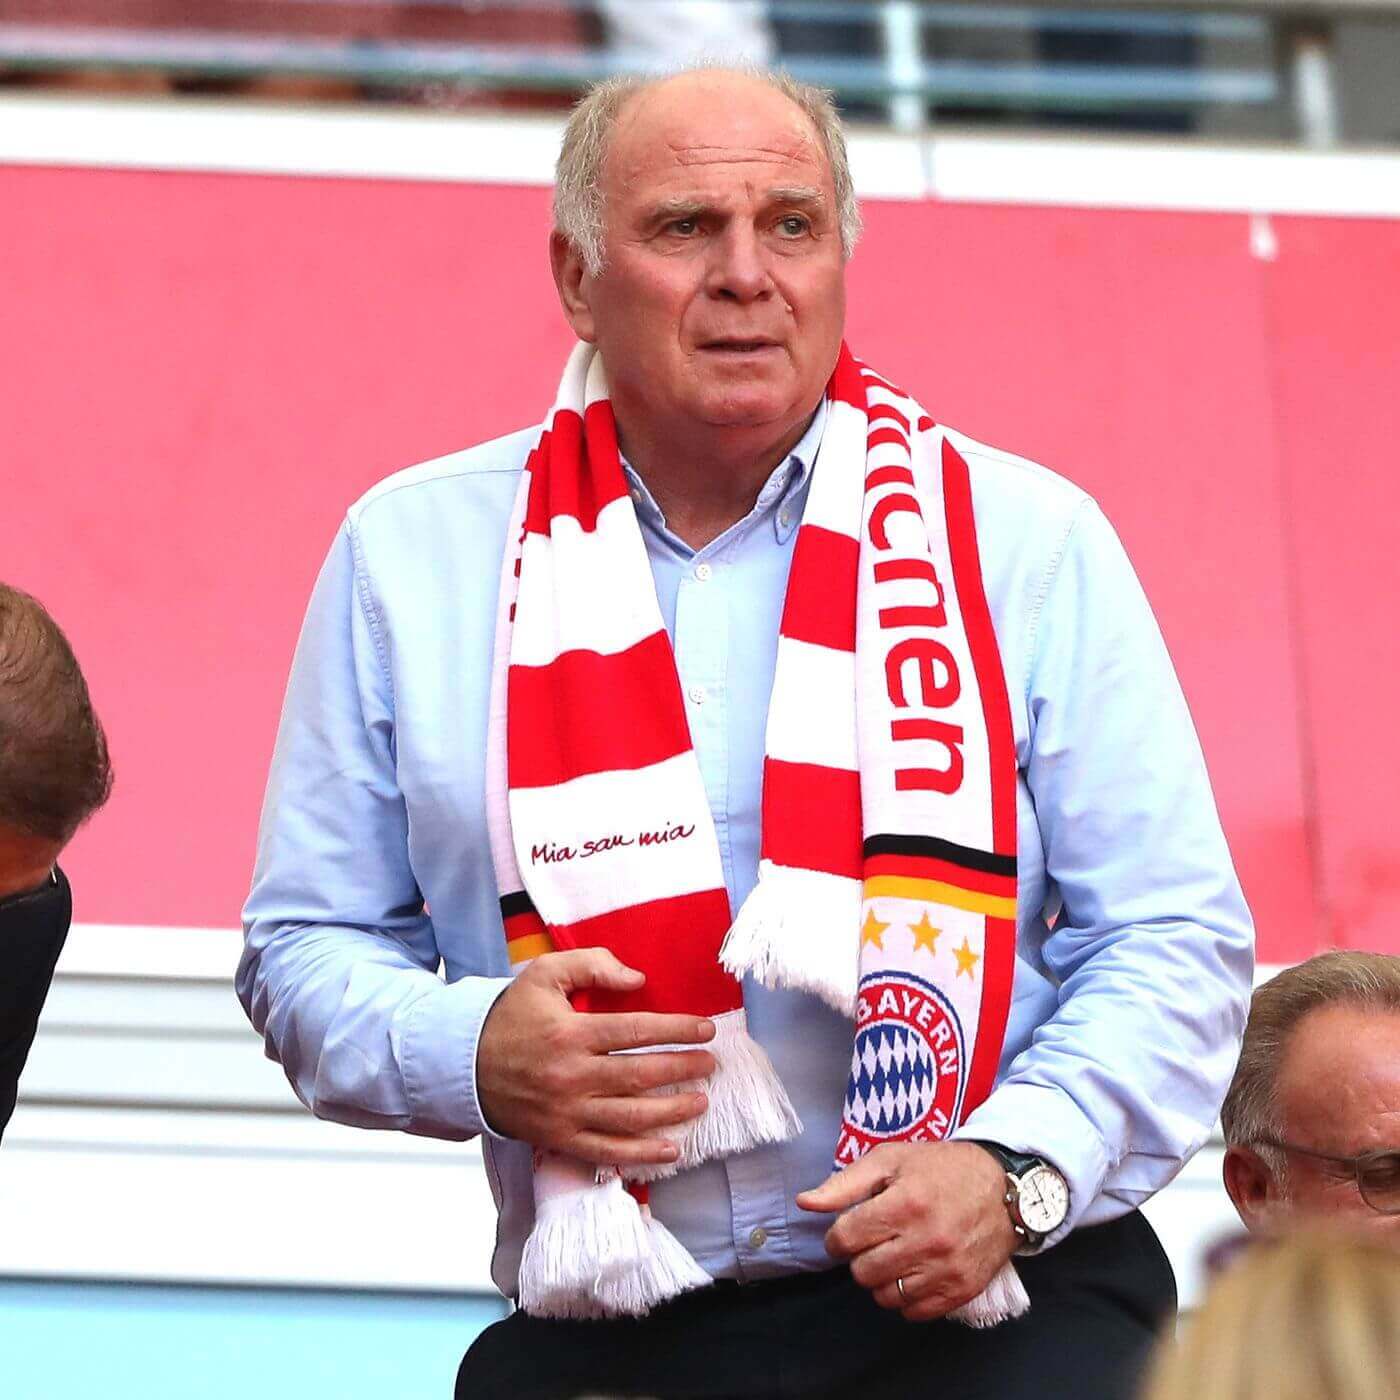 Former Bayern Munich president Uli Hoeness